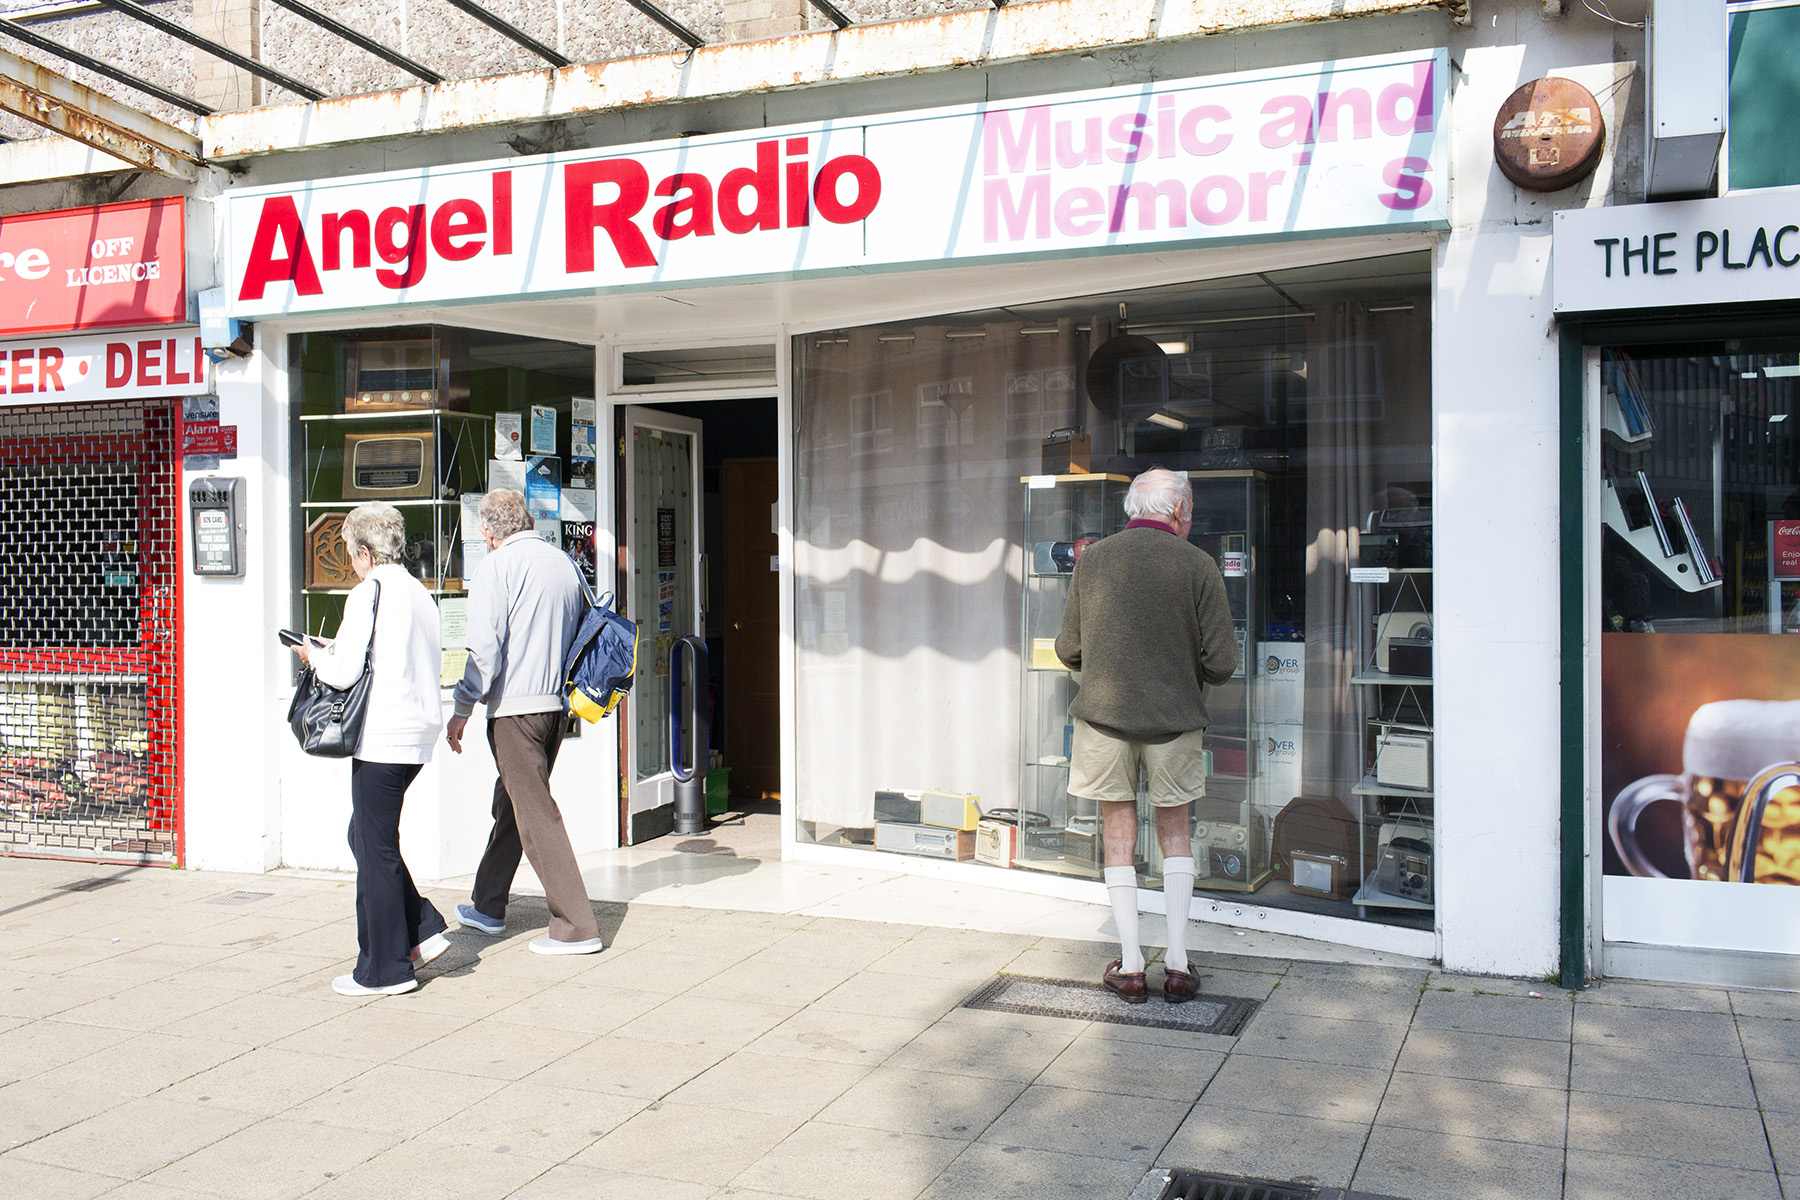   Angel Radio studios in Havant, England   